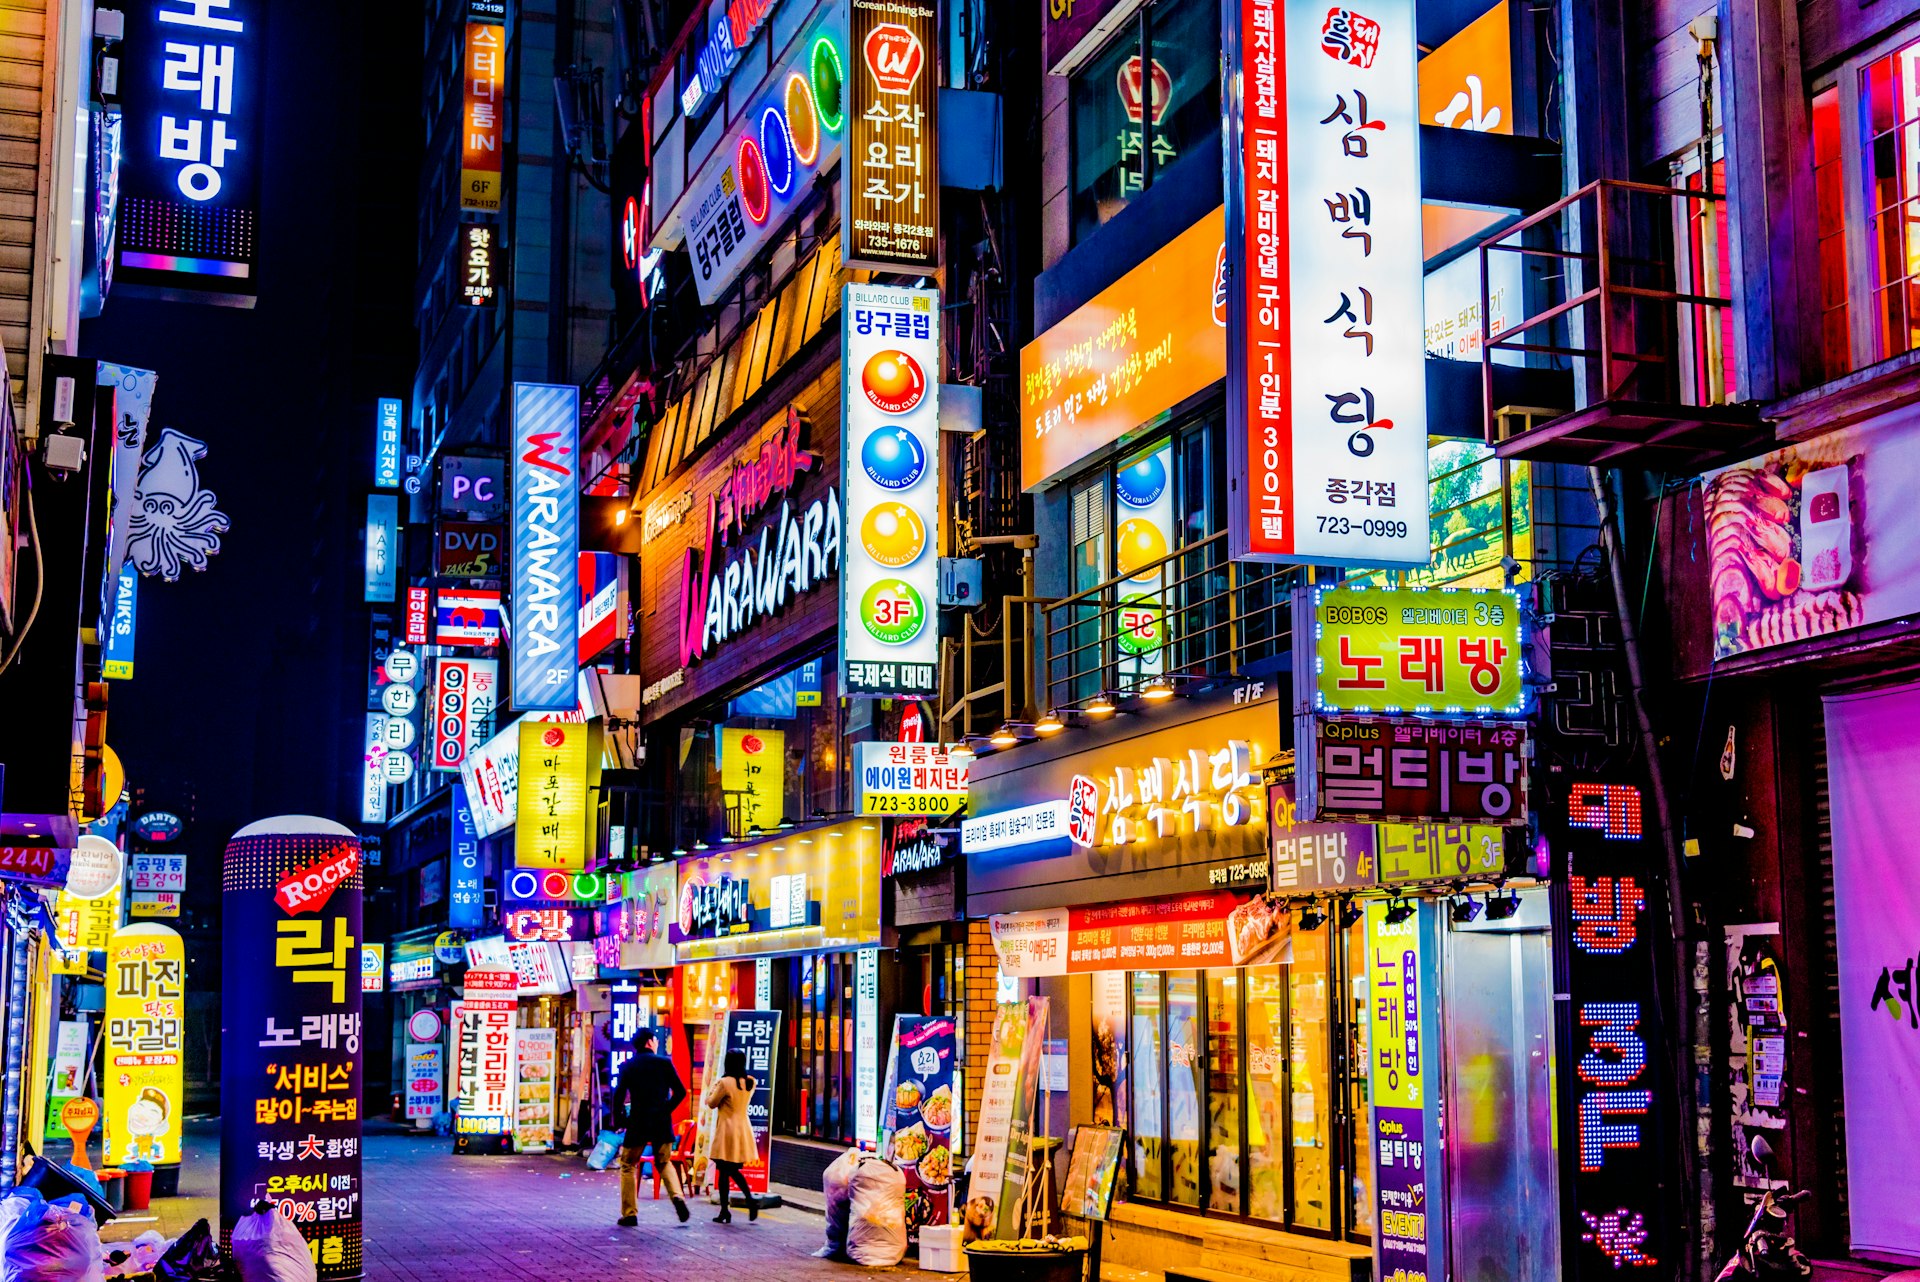 A Seoul street scene at night